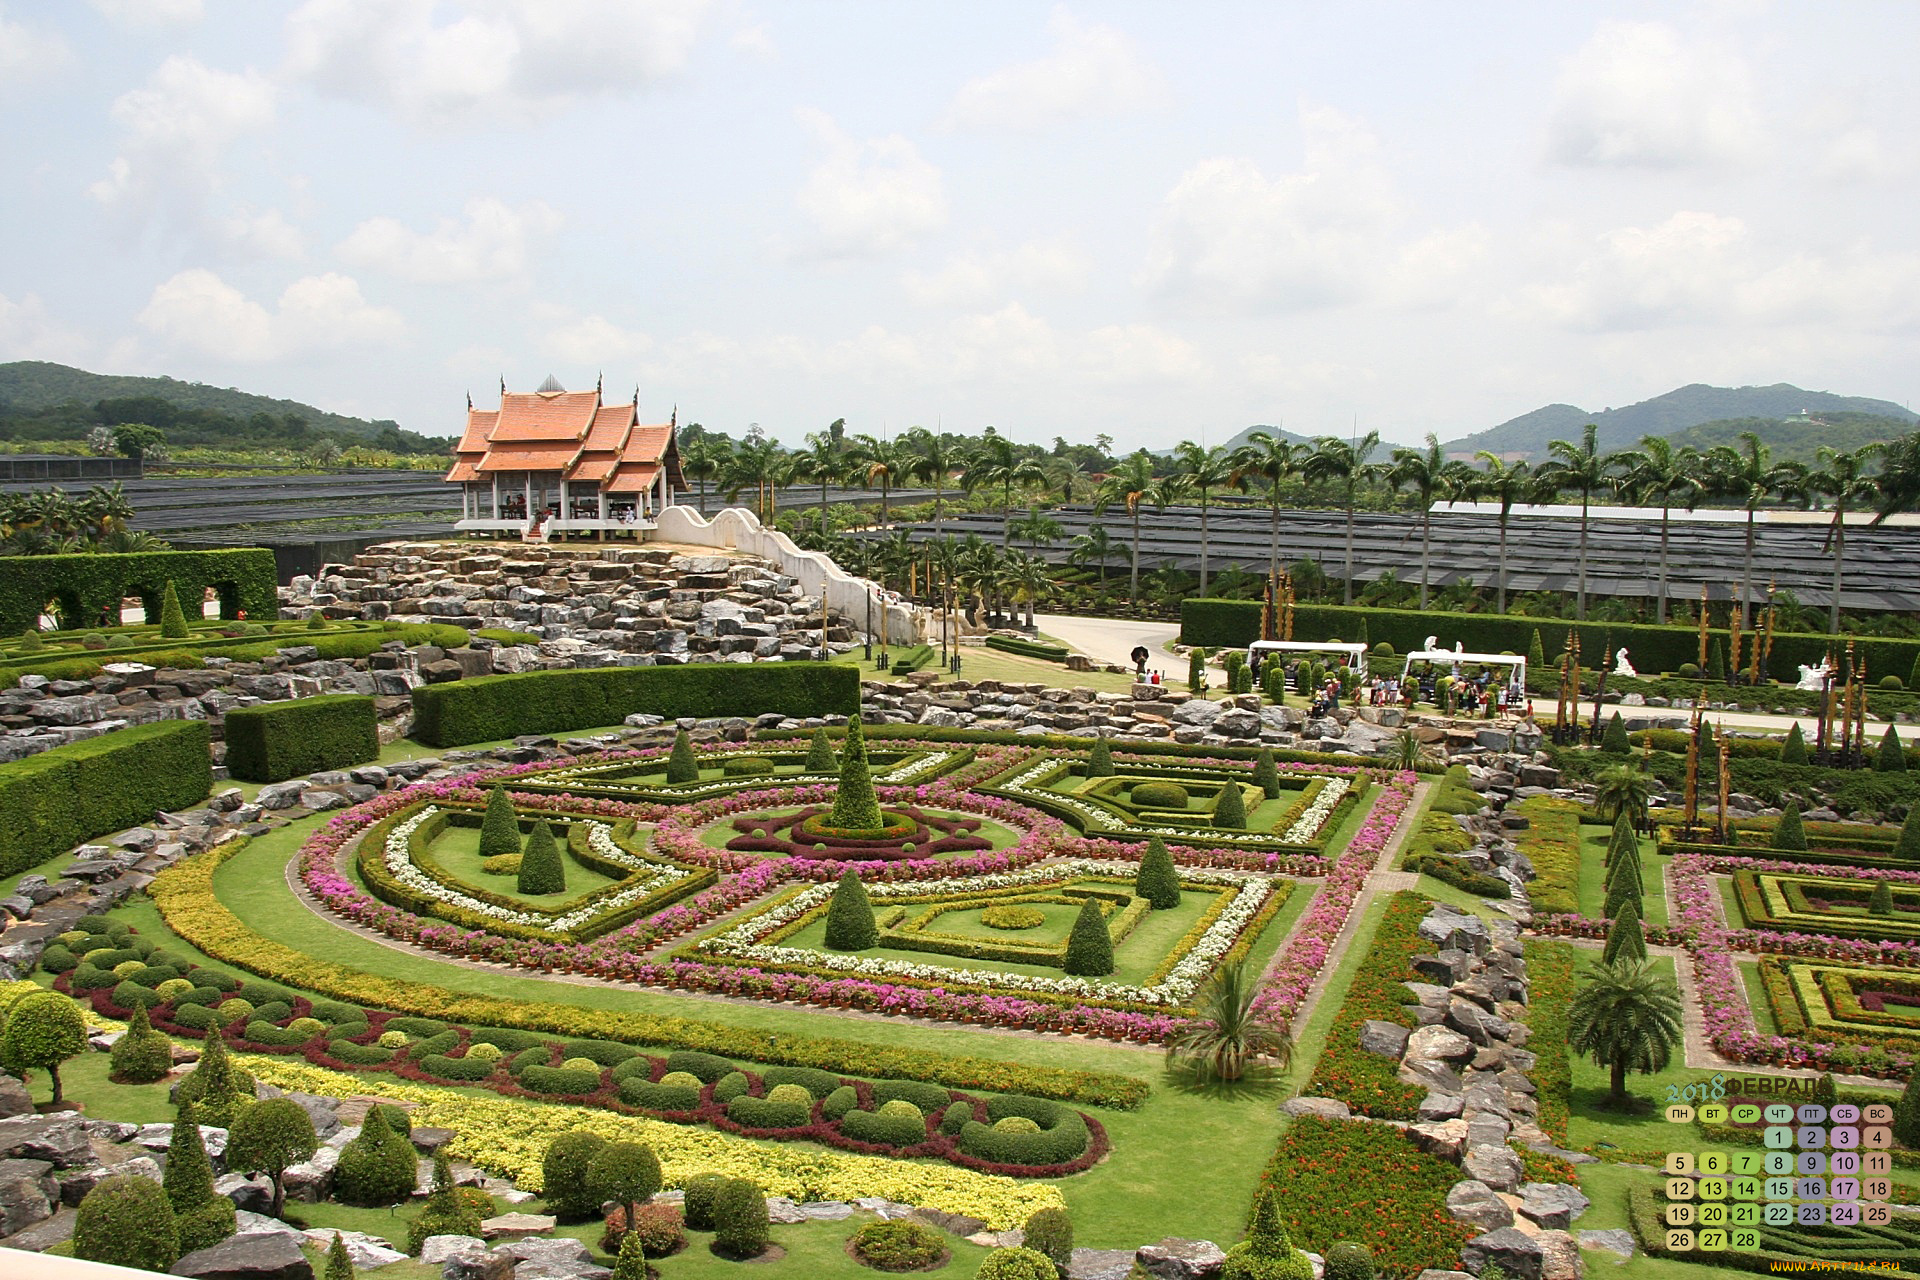 таиланд, календари, природа, растения, дом, парк, 2018